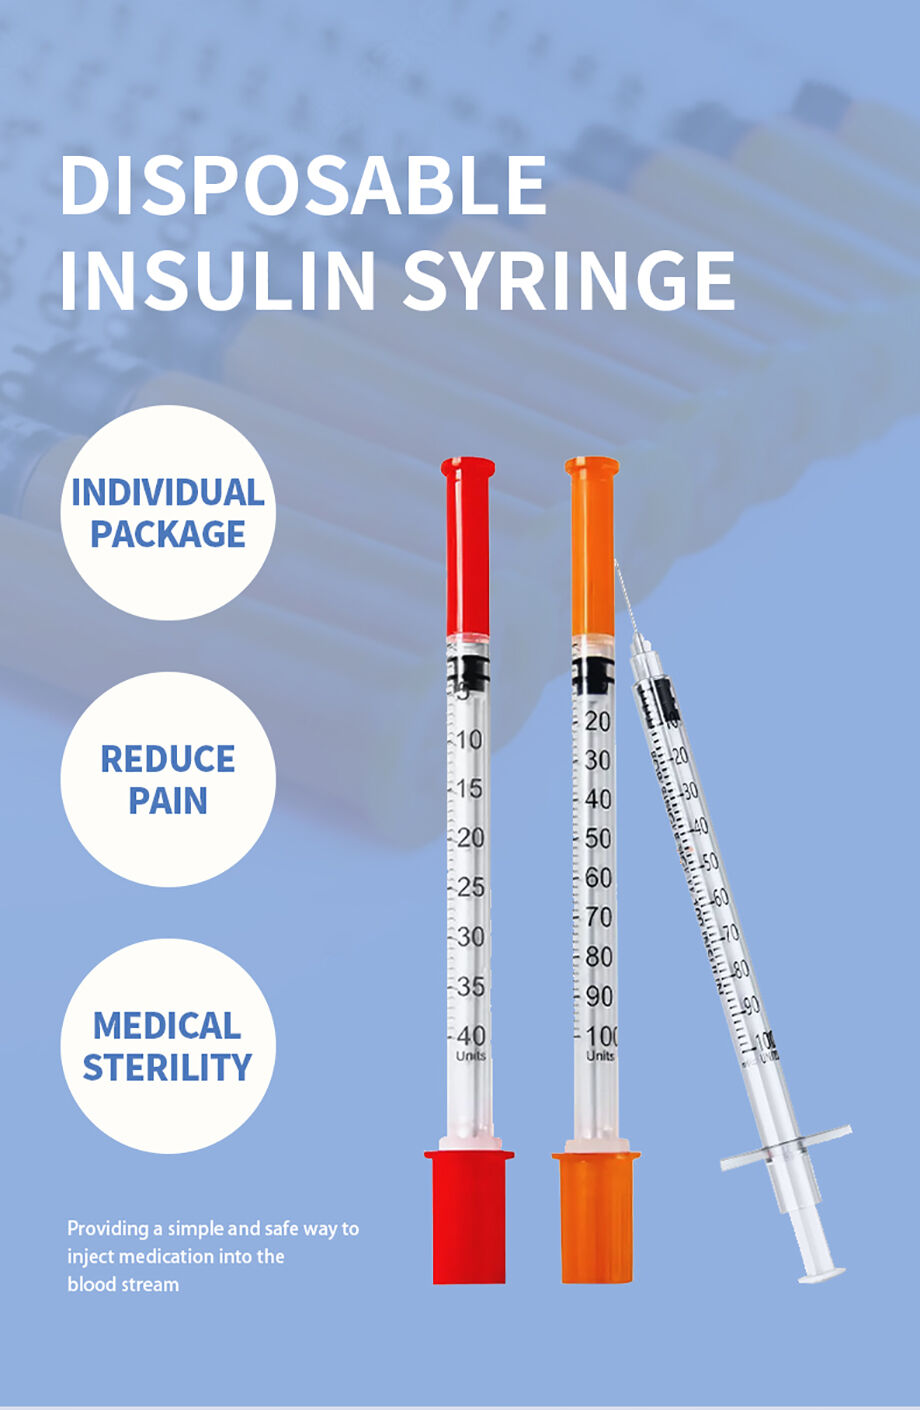 Seringue insuline fine BD Micro avec aiguille - Degros